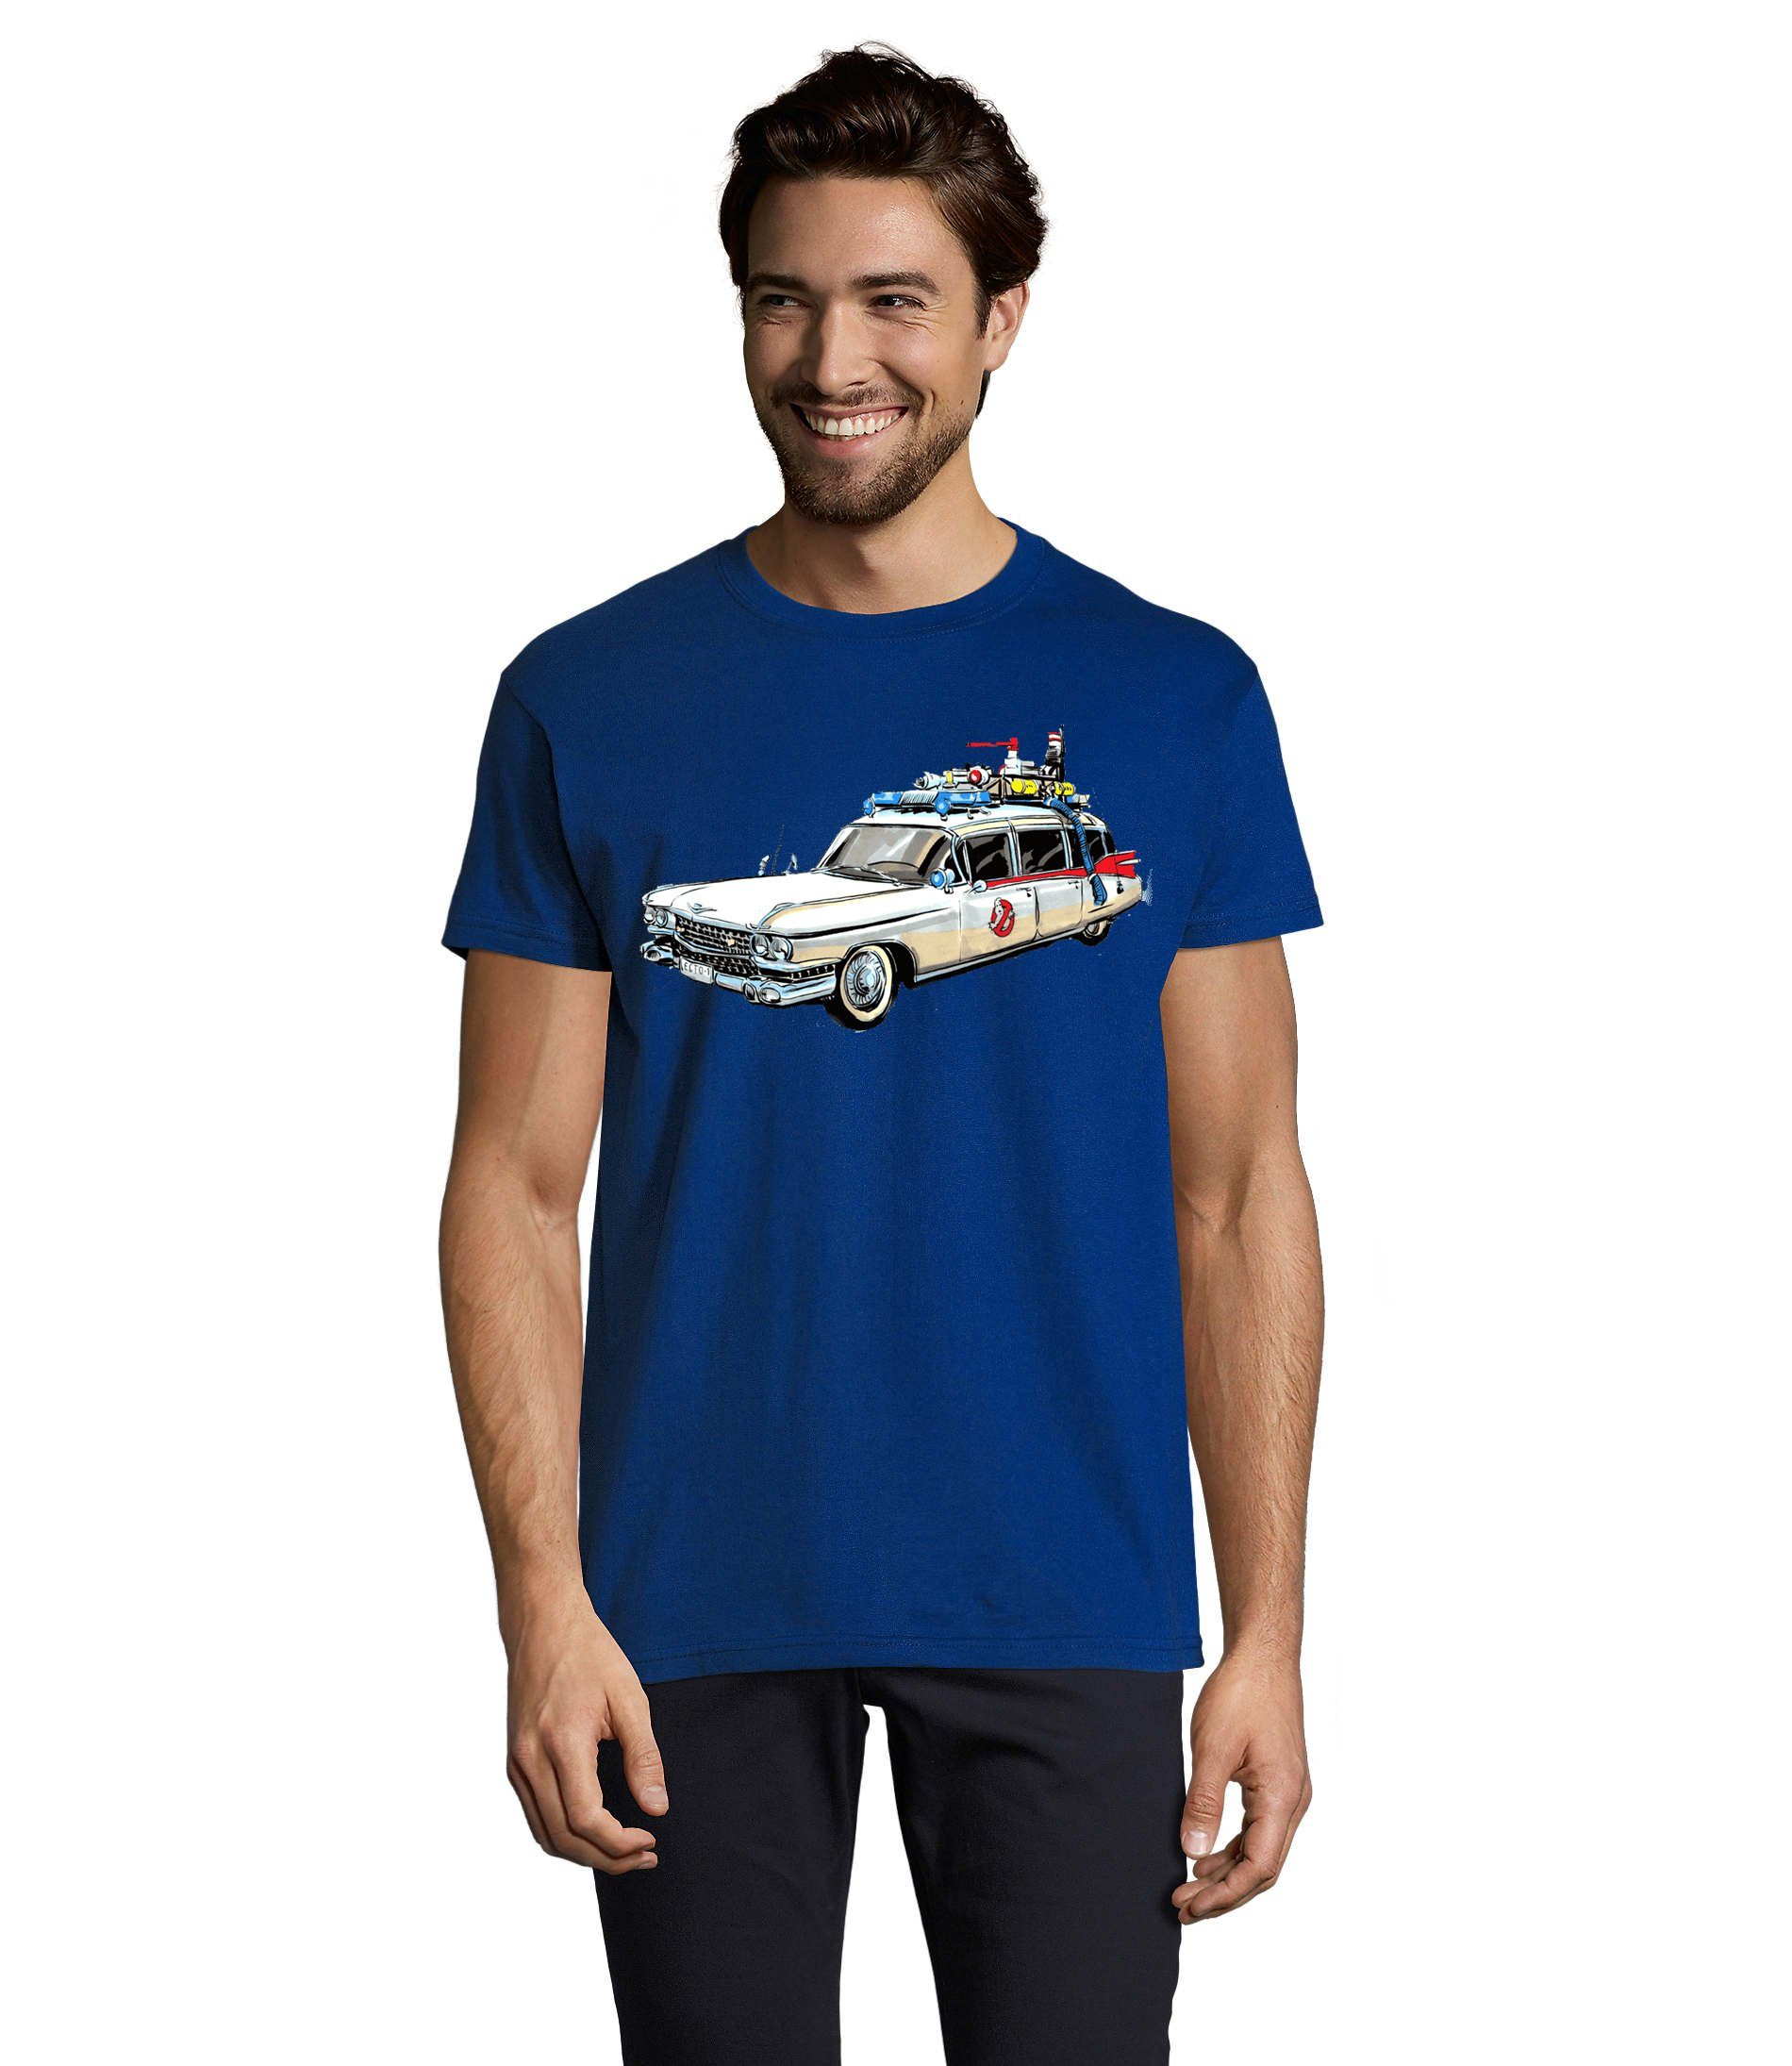 Film Geister Ghostbusters Herren Brownie Blondie Ghost T-Shirt & Blau Geisterjäger Cars Auto